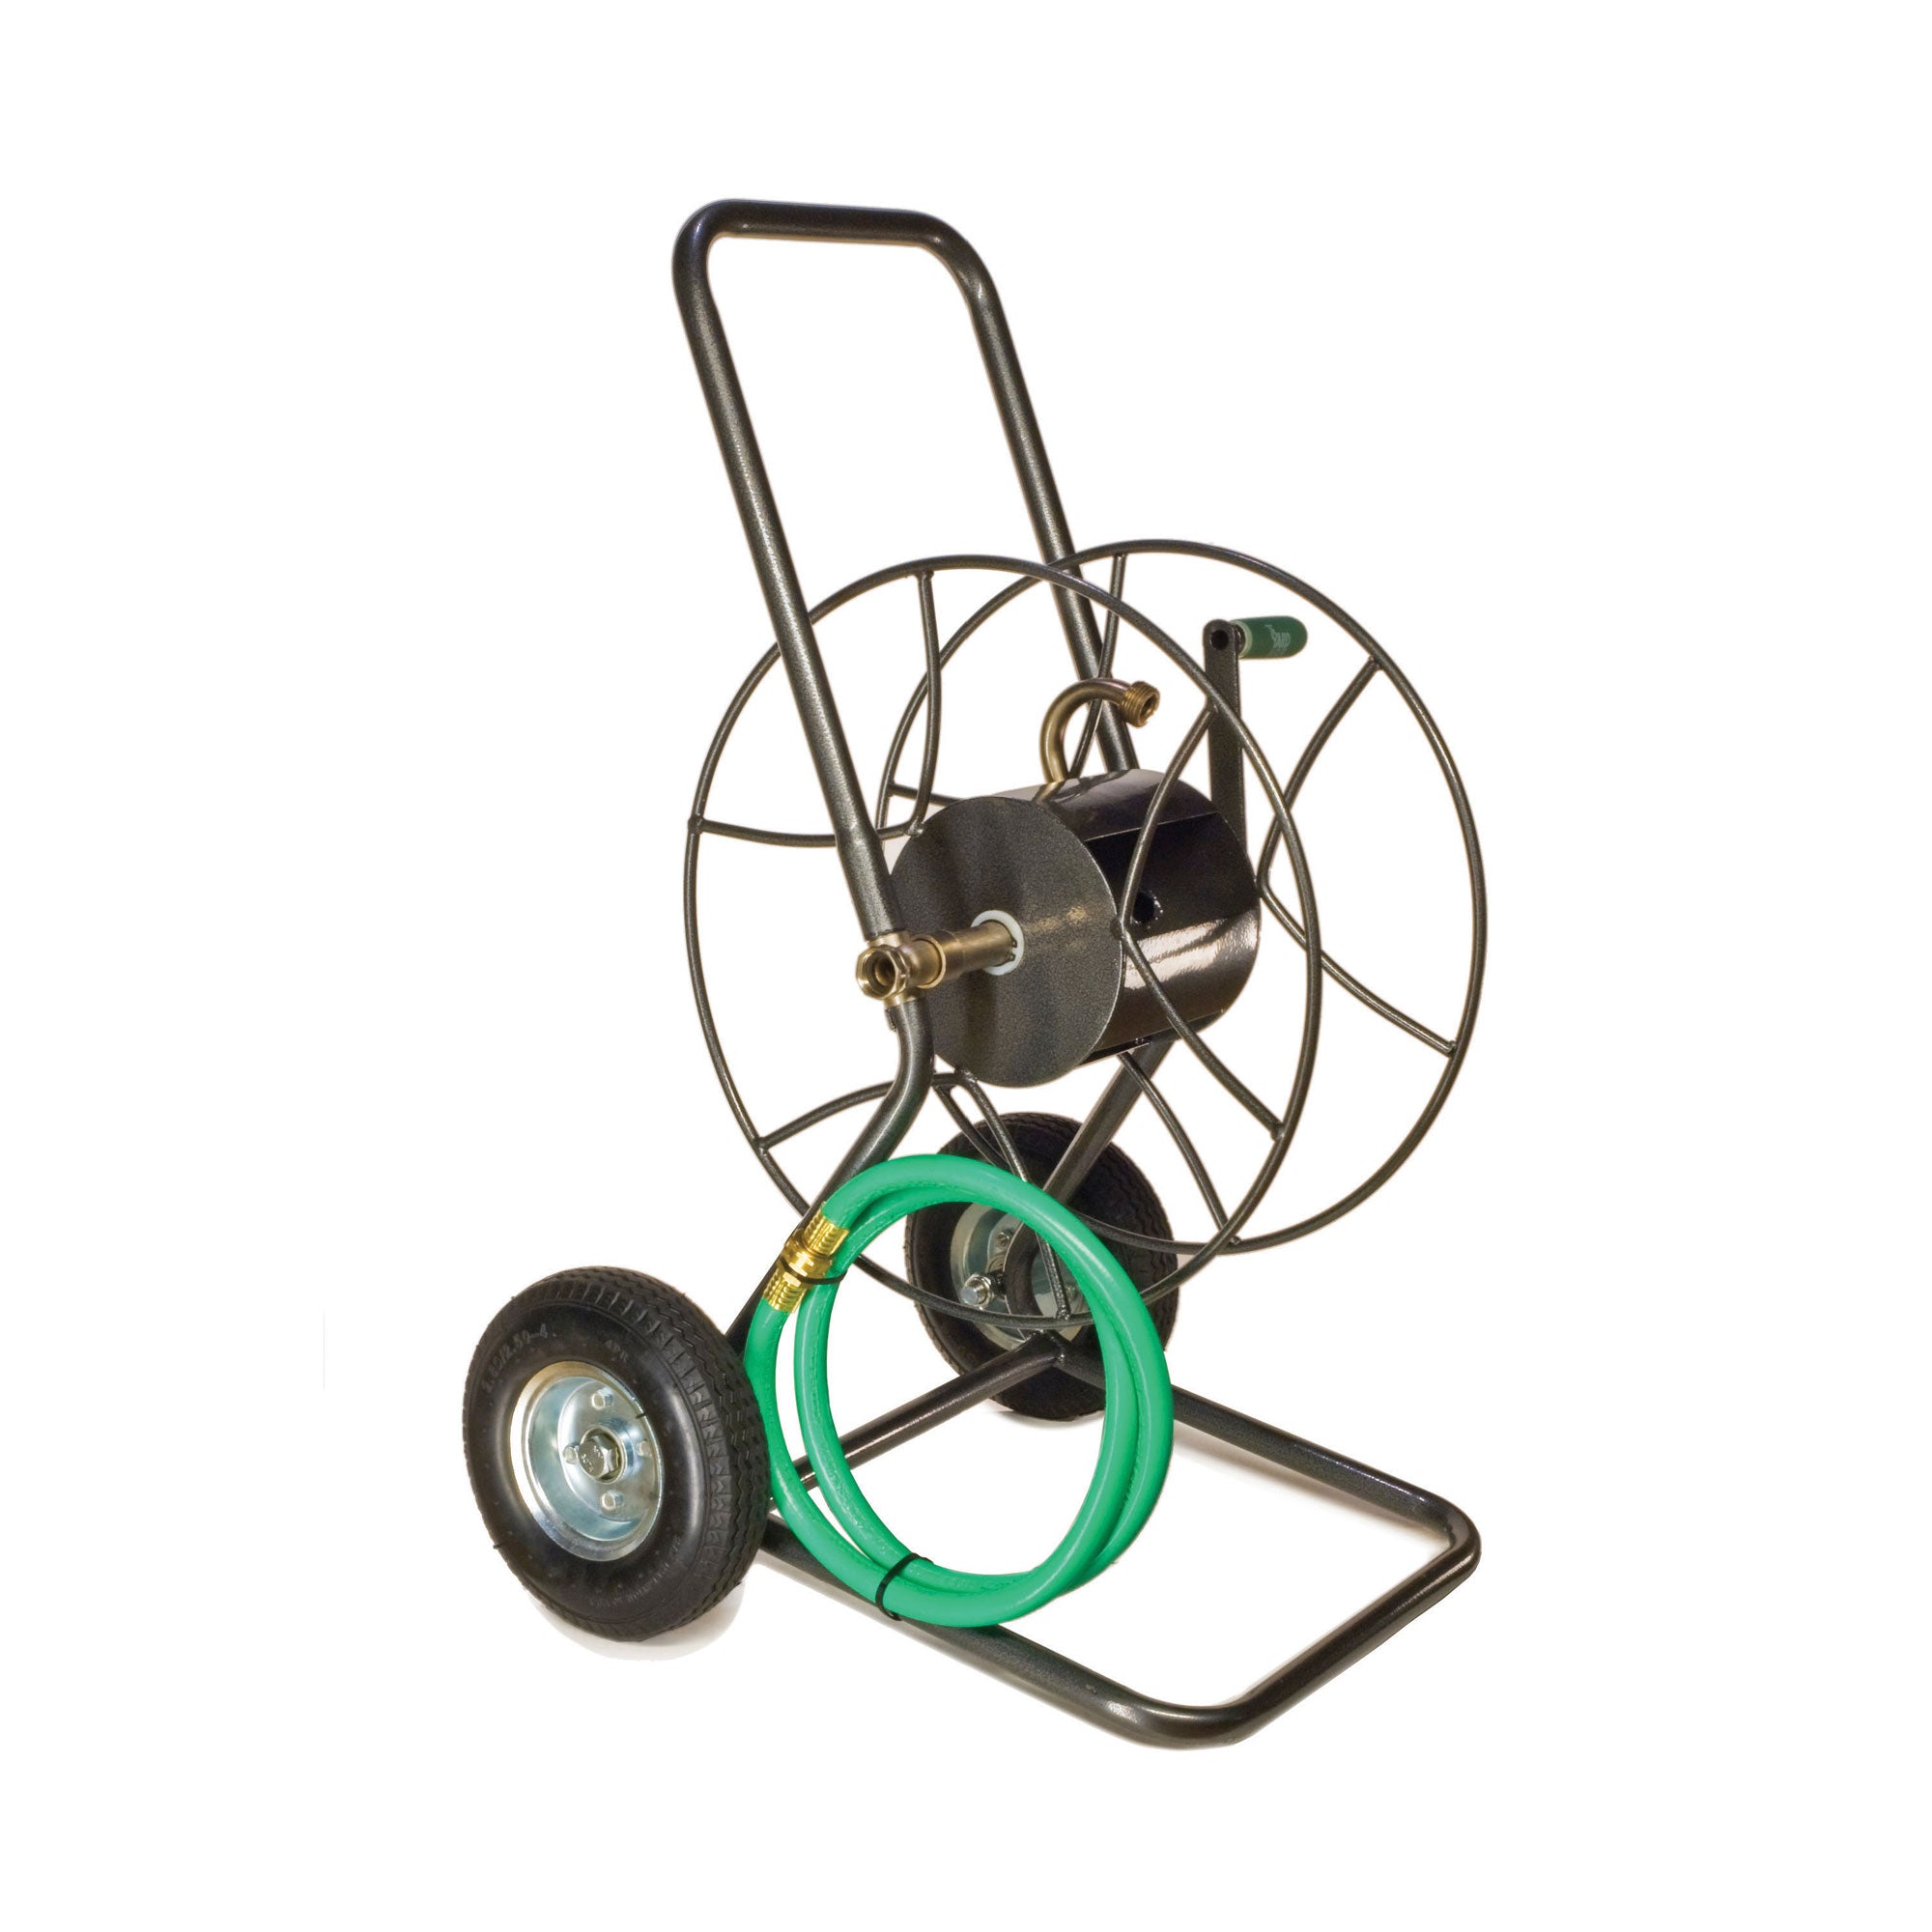 Shop Garden Hose Reel Wheel online